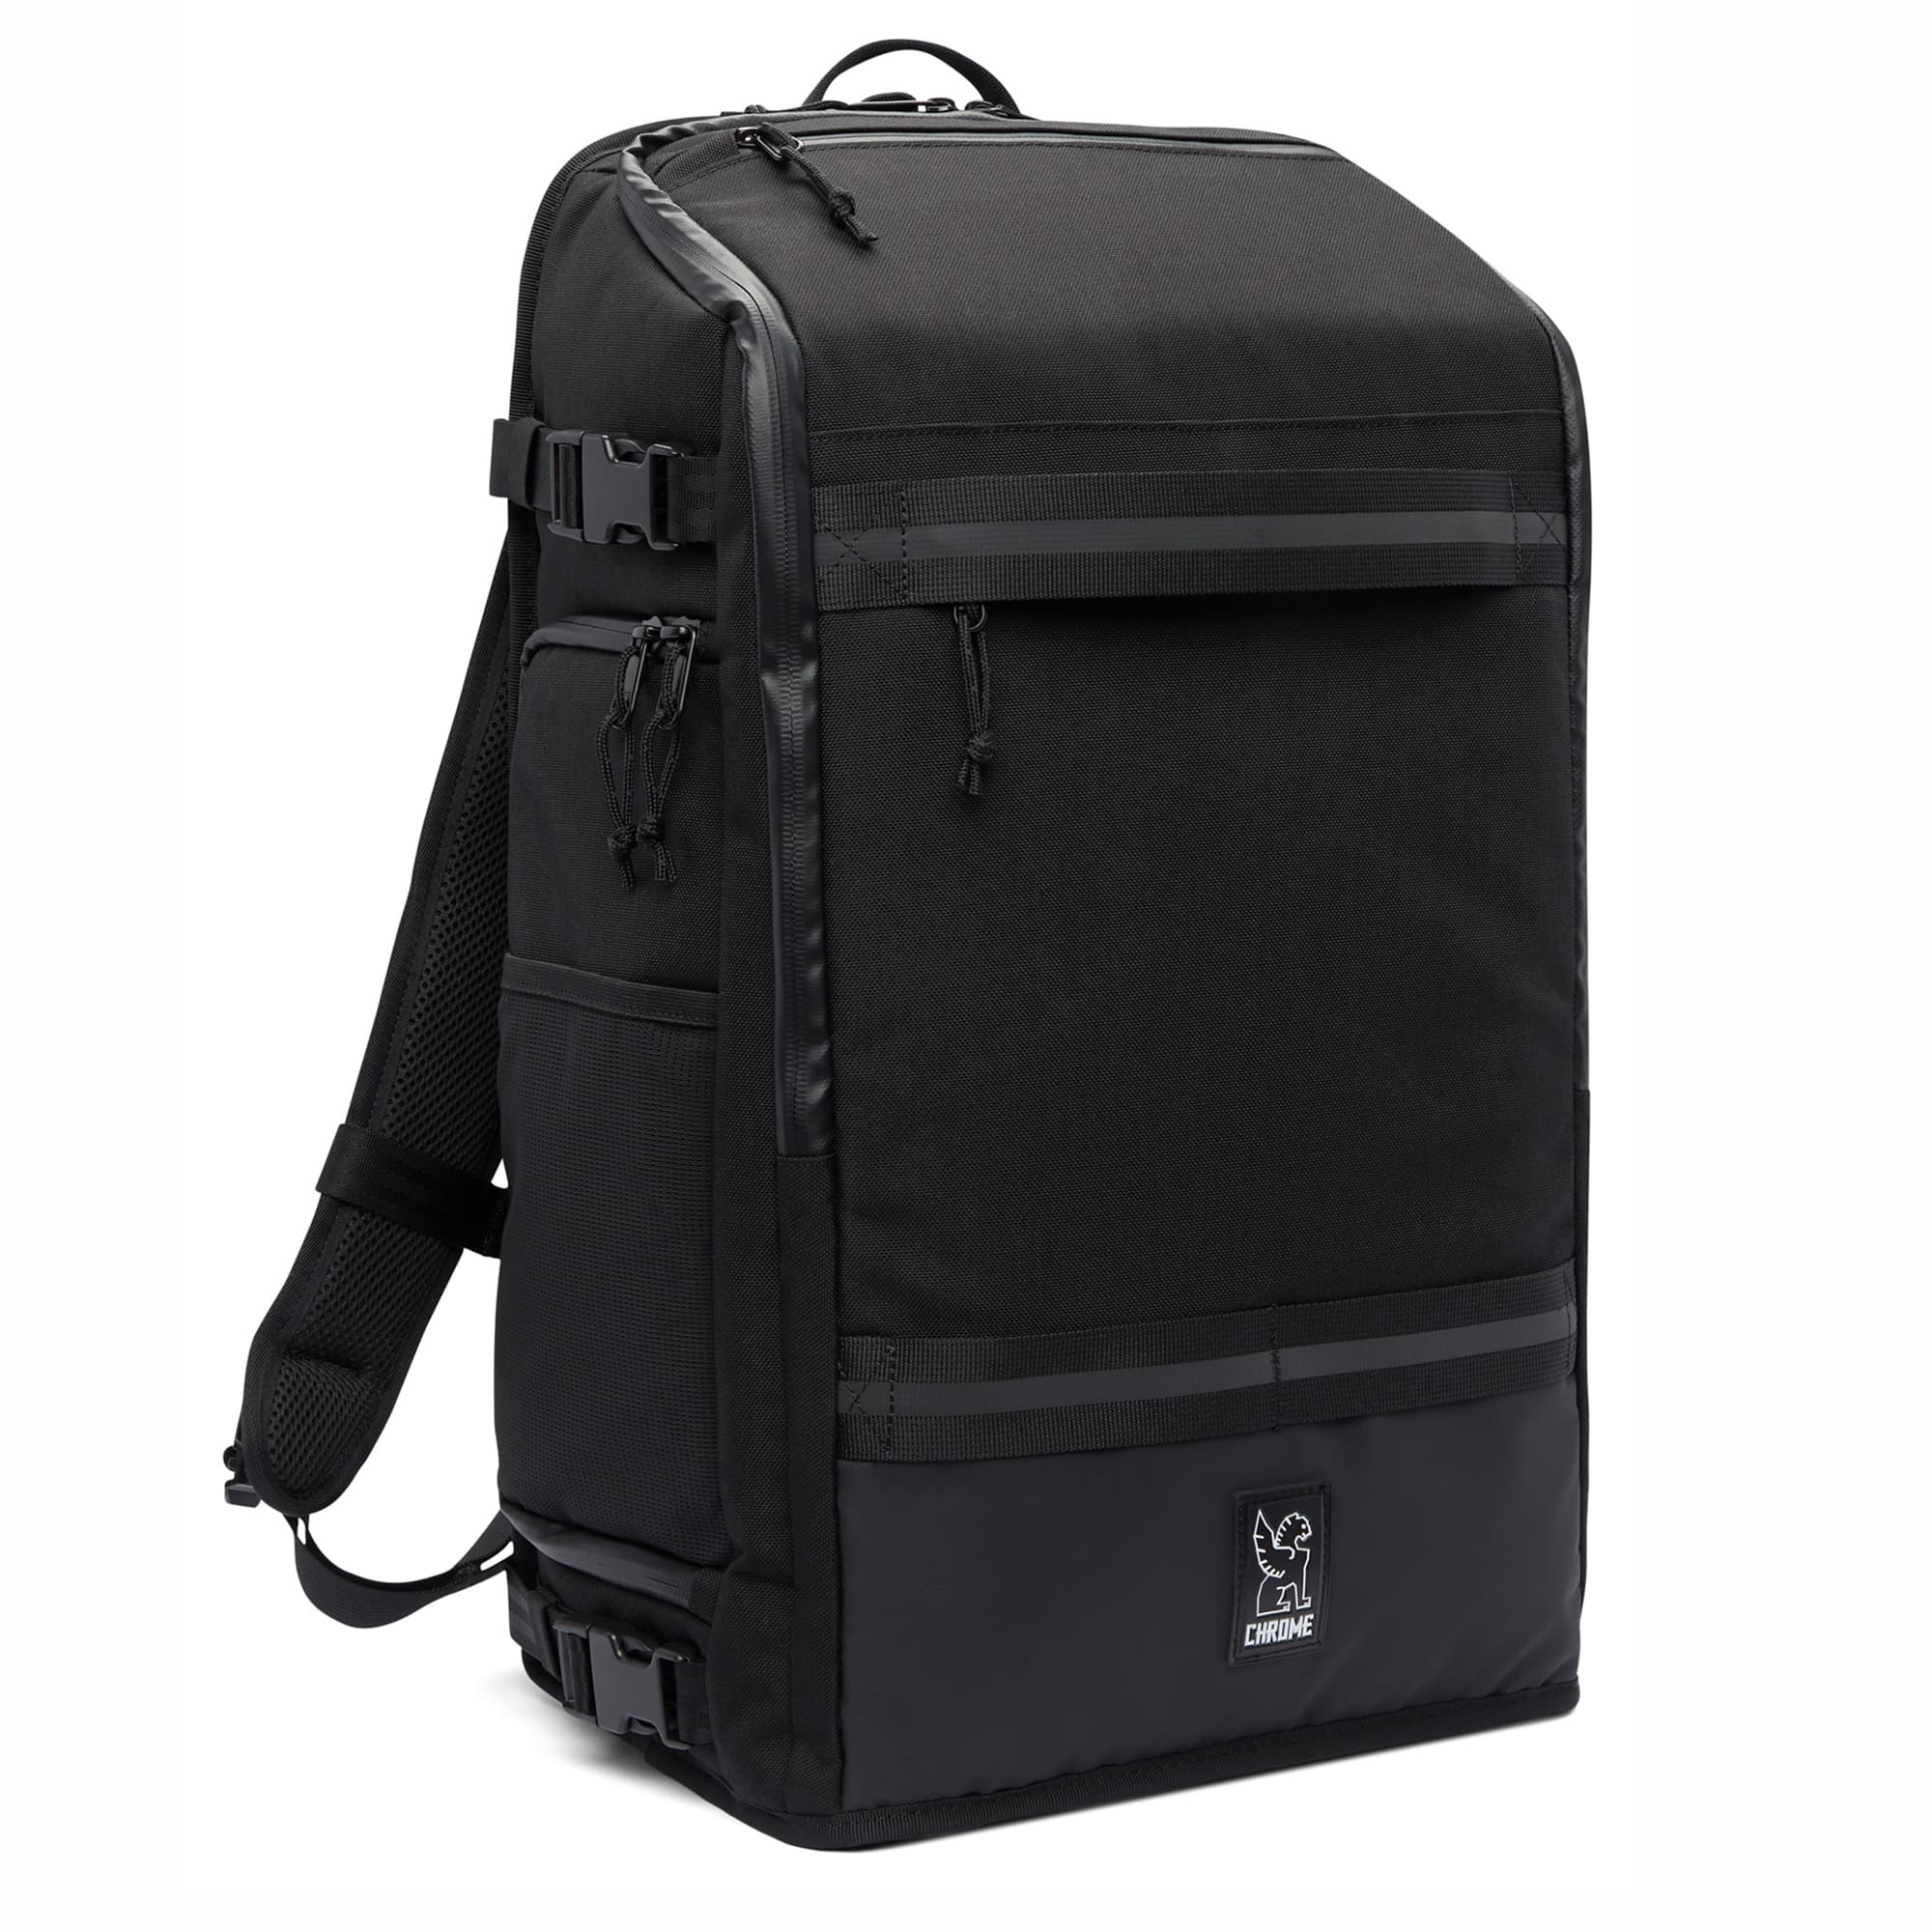 Niko camera tech backpack in black